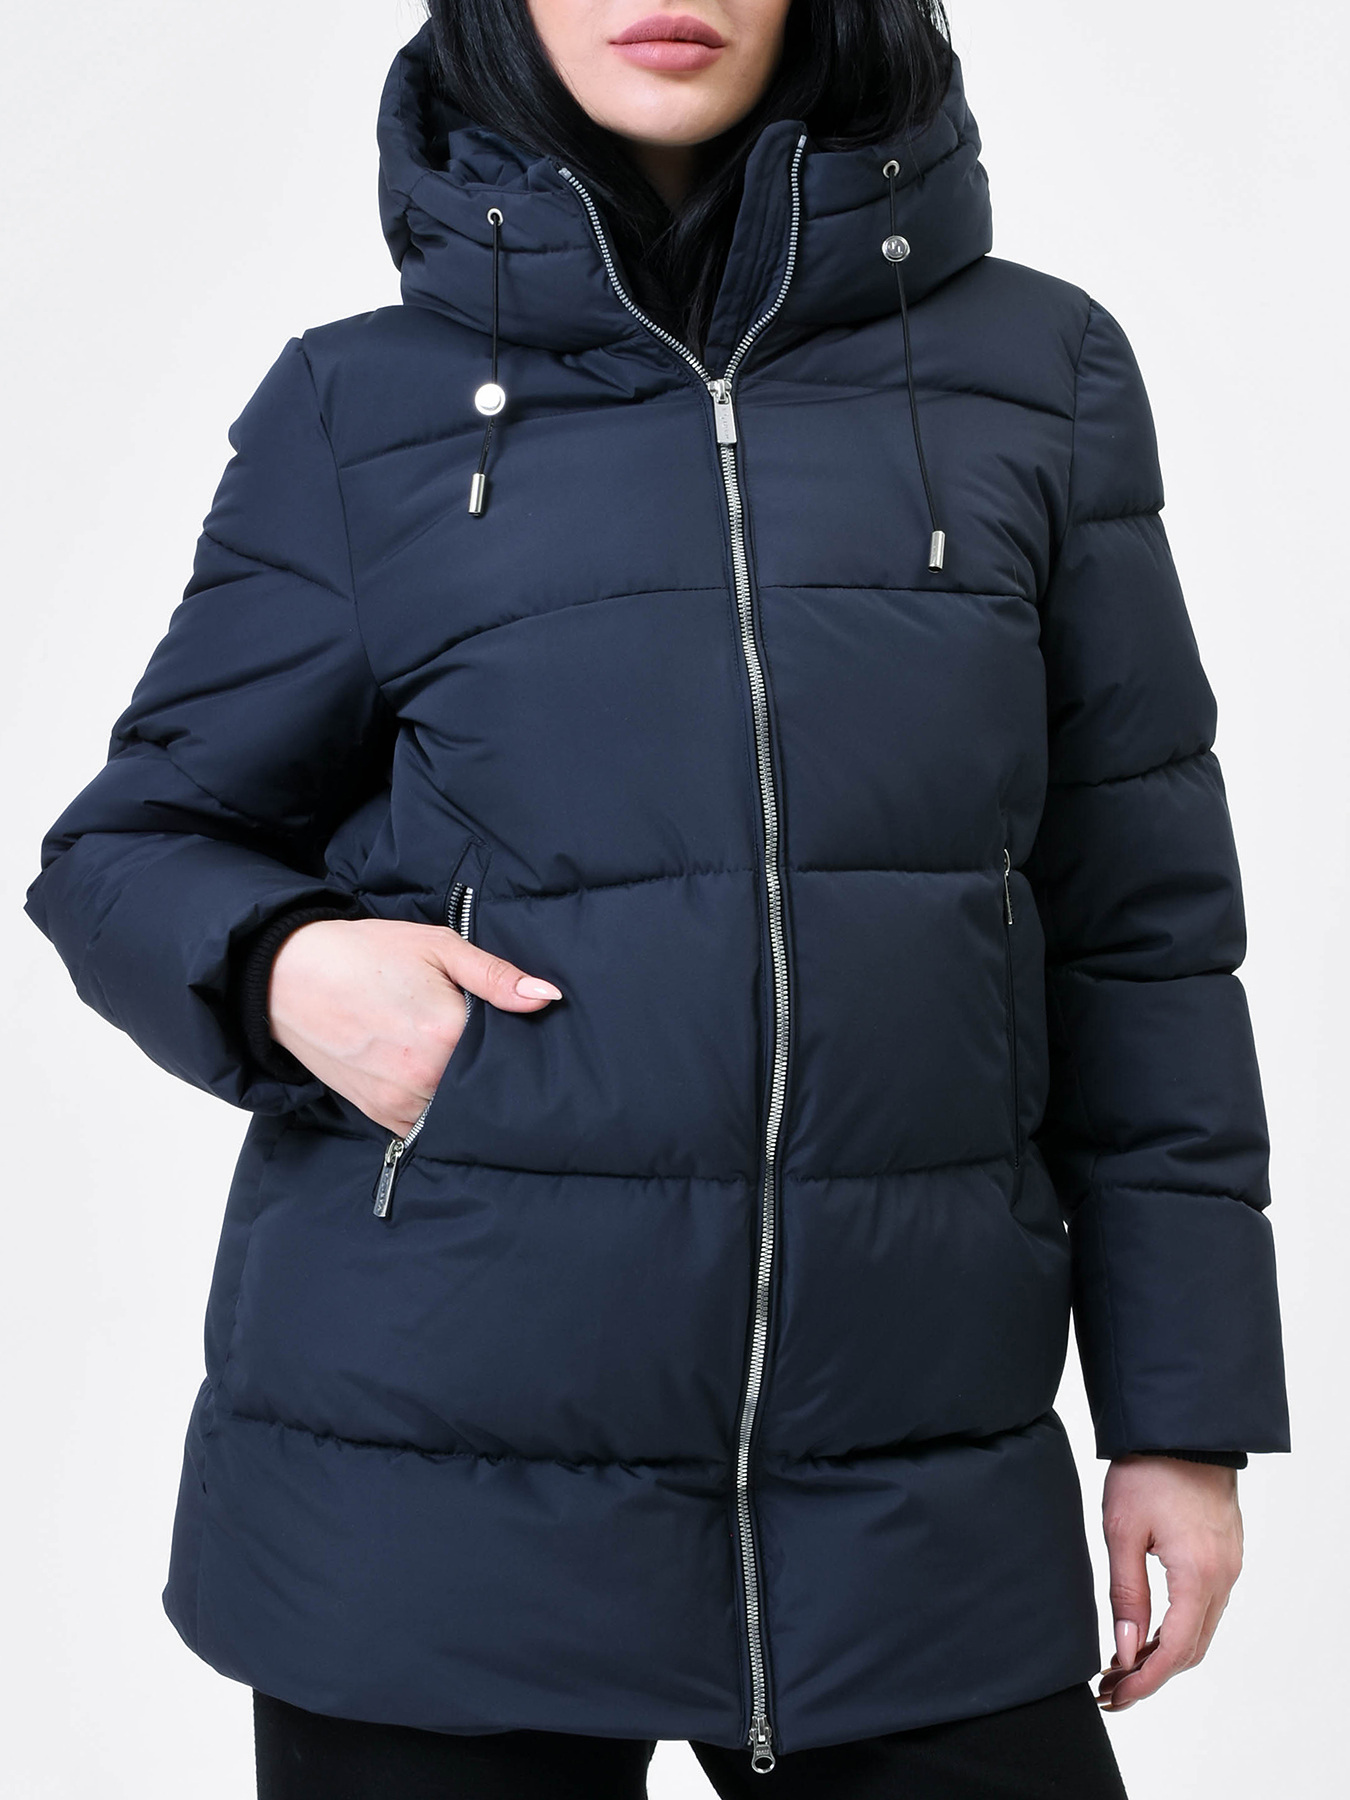 Пальто зимнее Maritta 433612-021, цвет темно-синий, размер 46 - фото 1